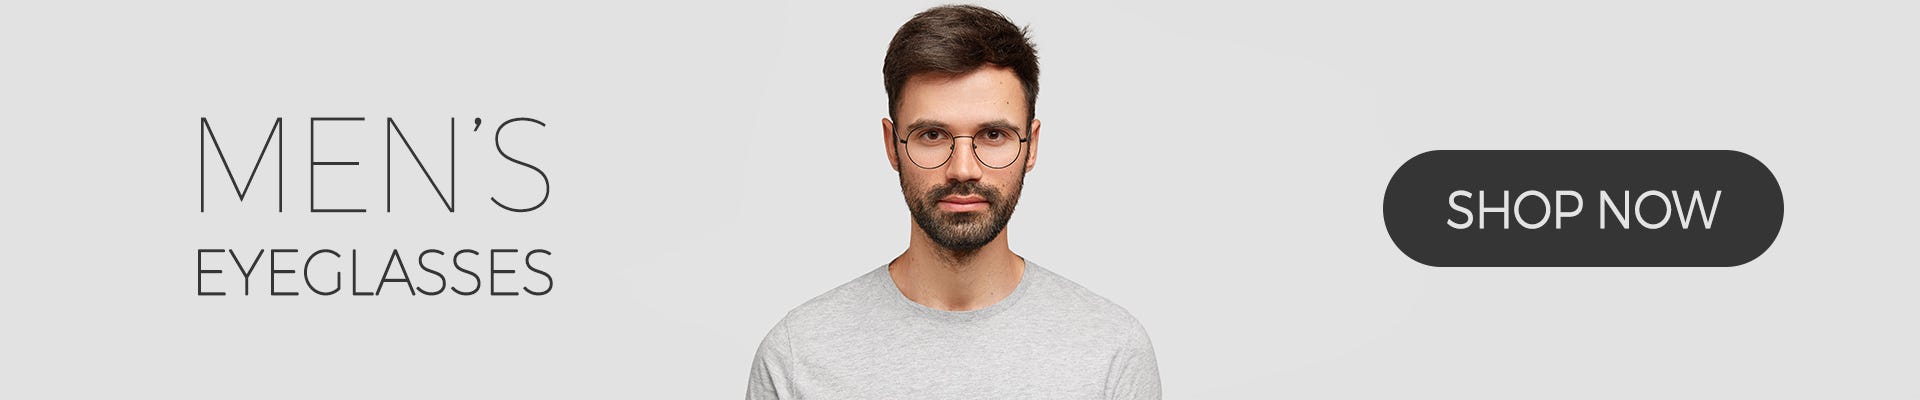 Buy Men's Eyeglasses